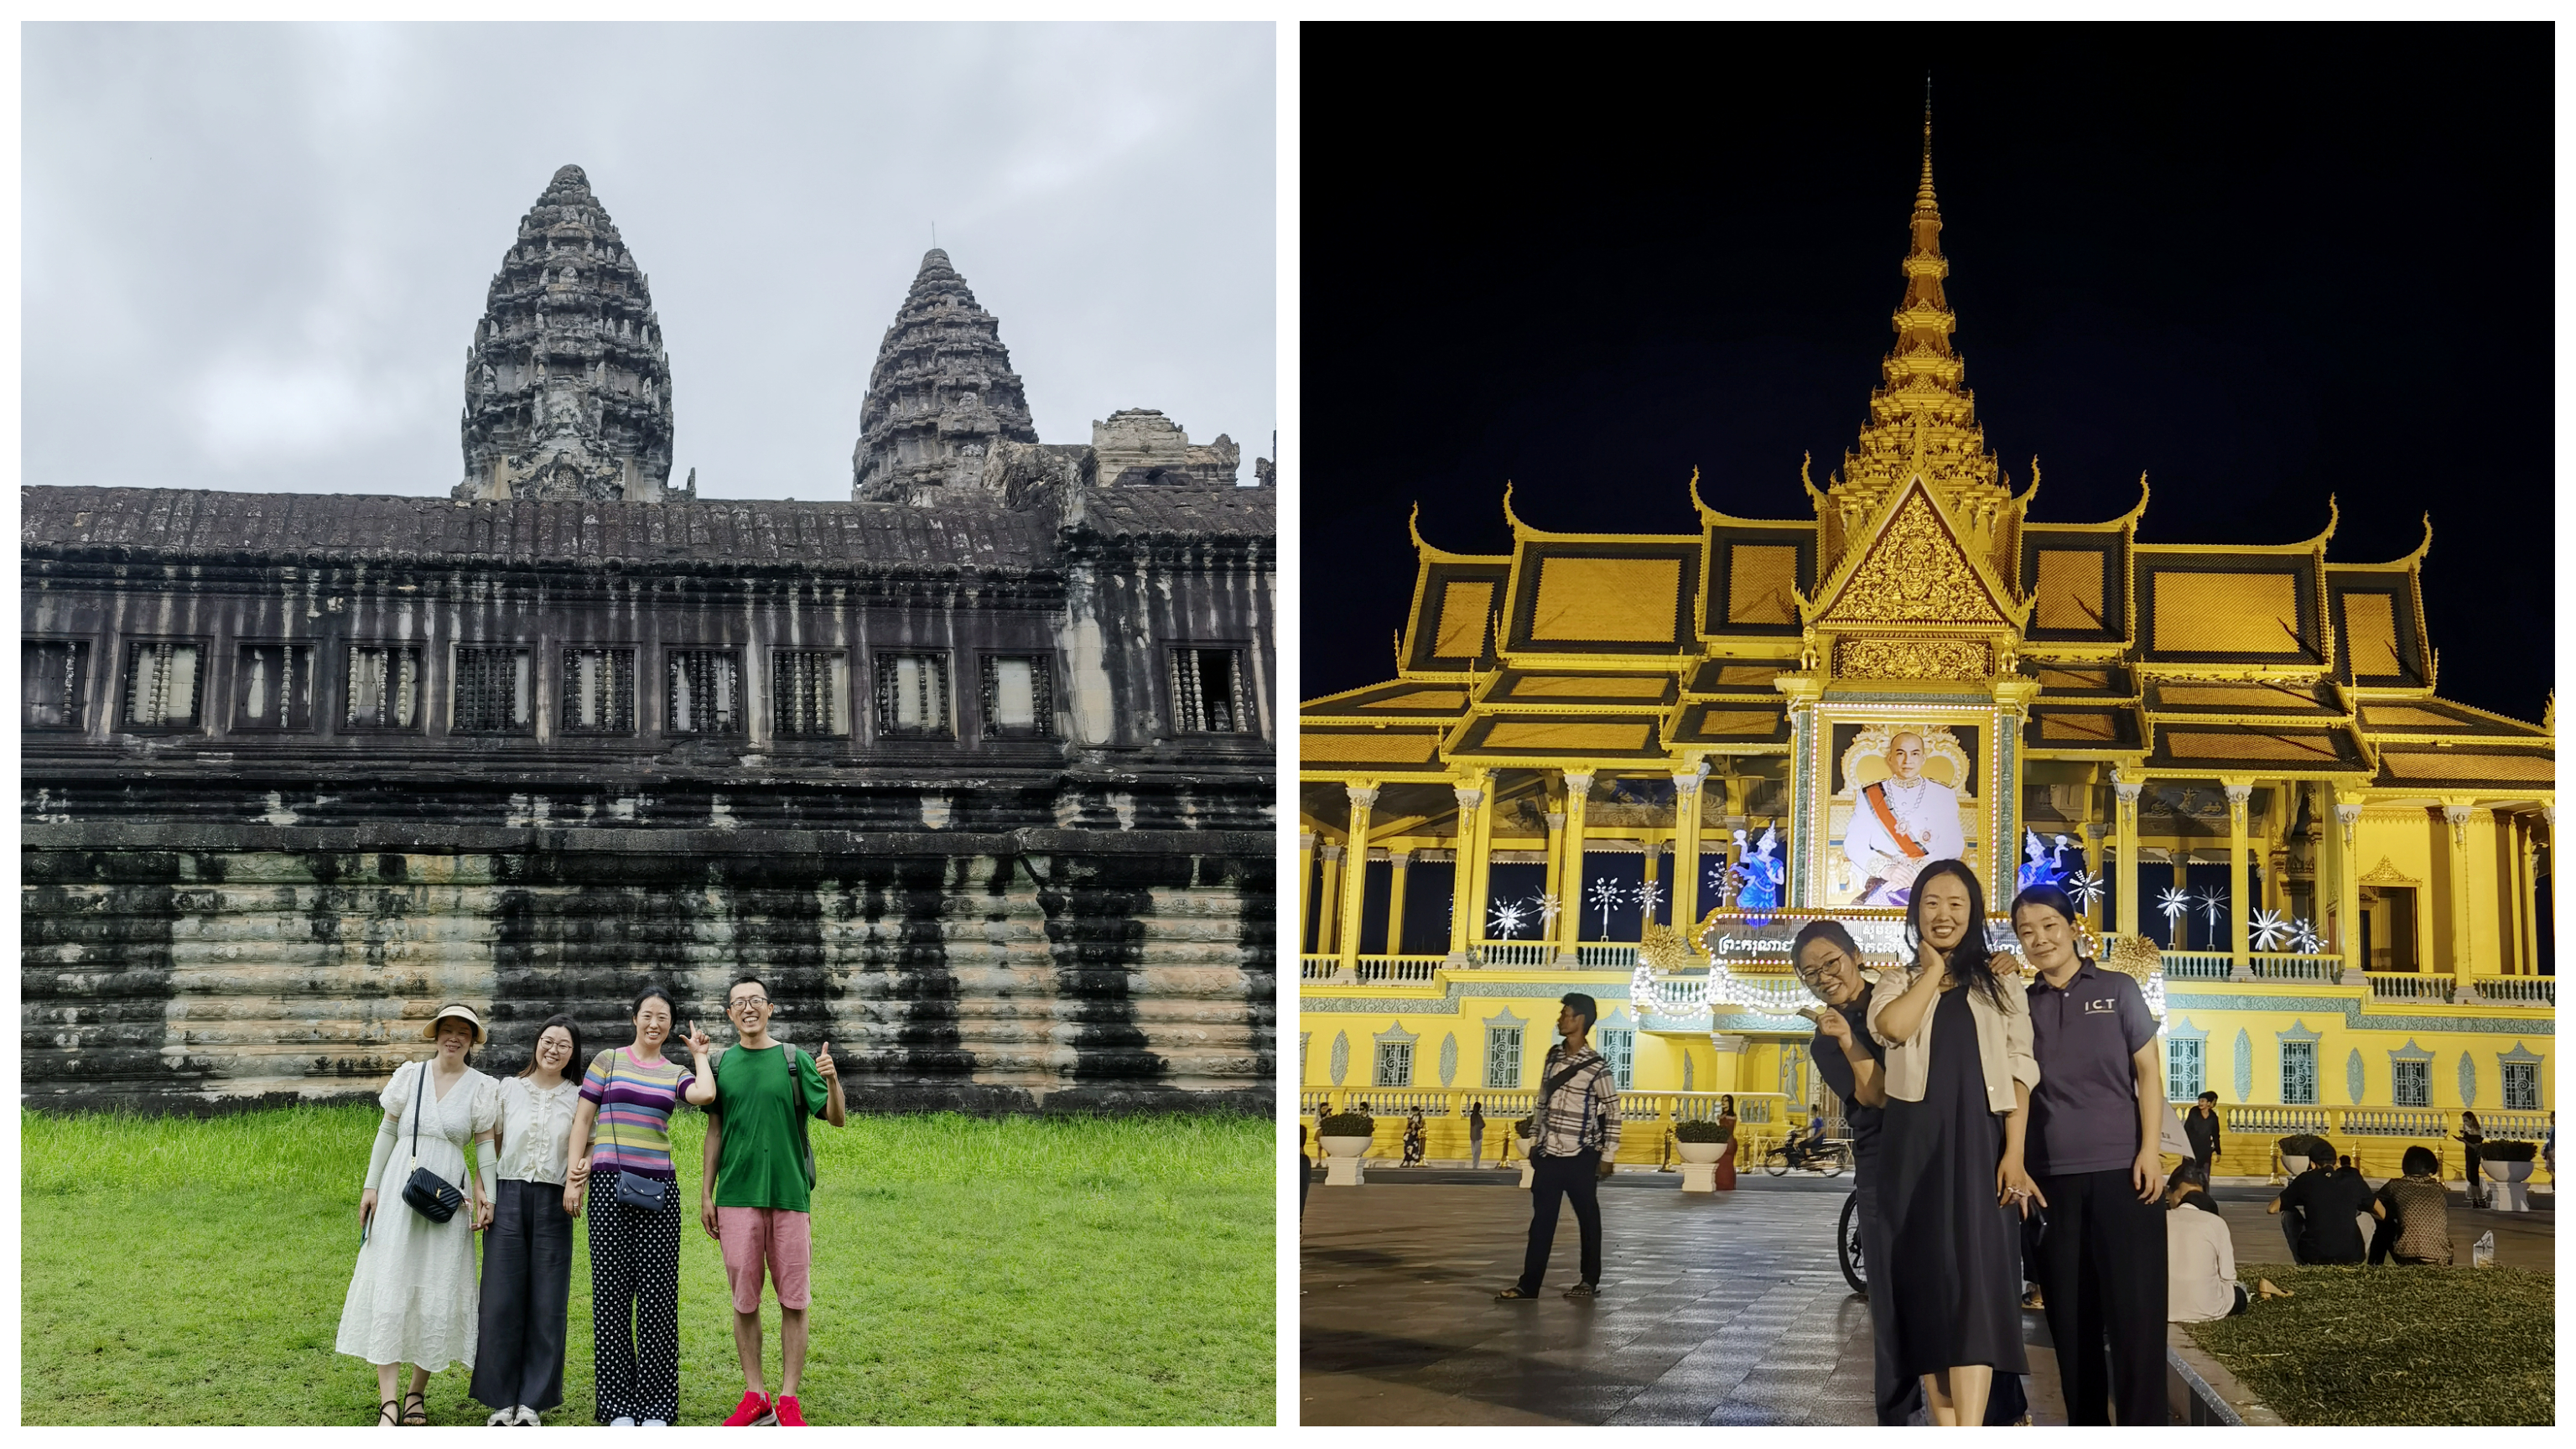 Le Grand Palais du Cambodge et Angkor Wat